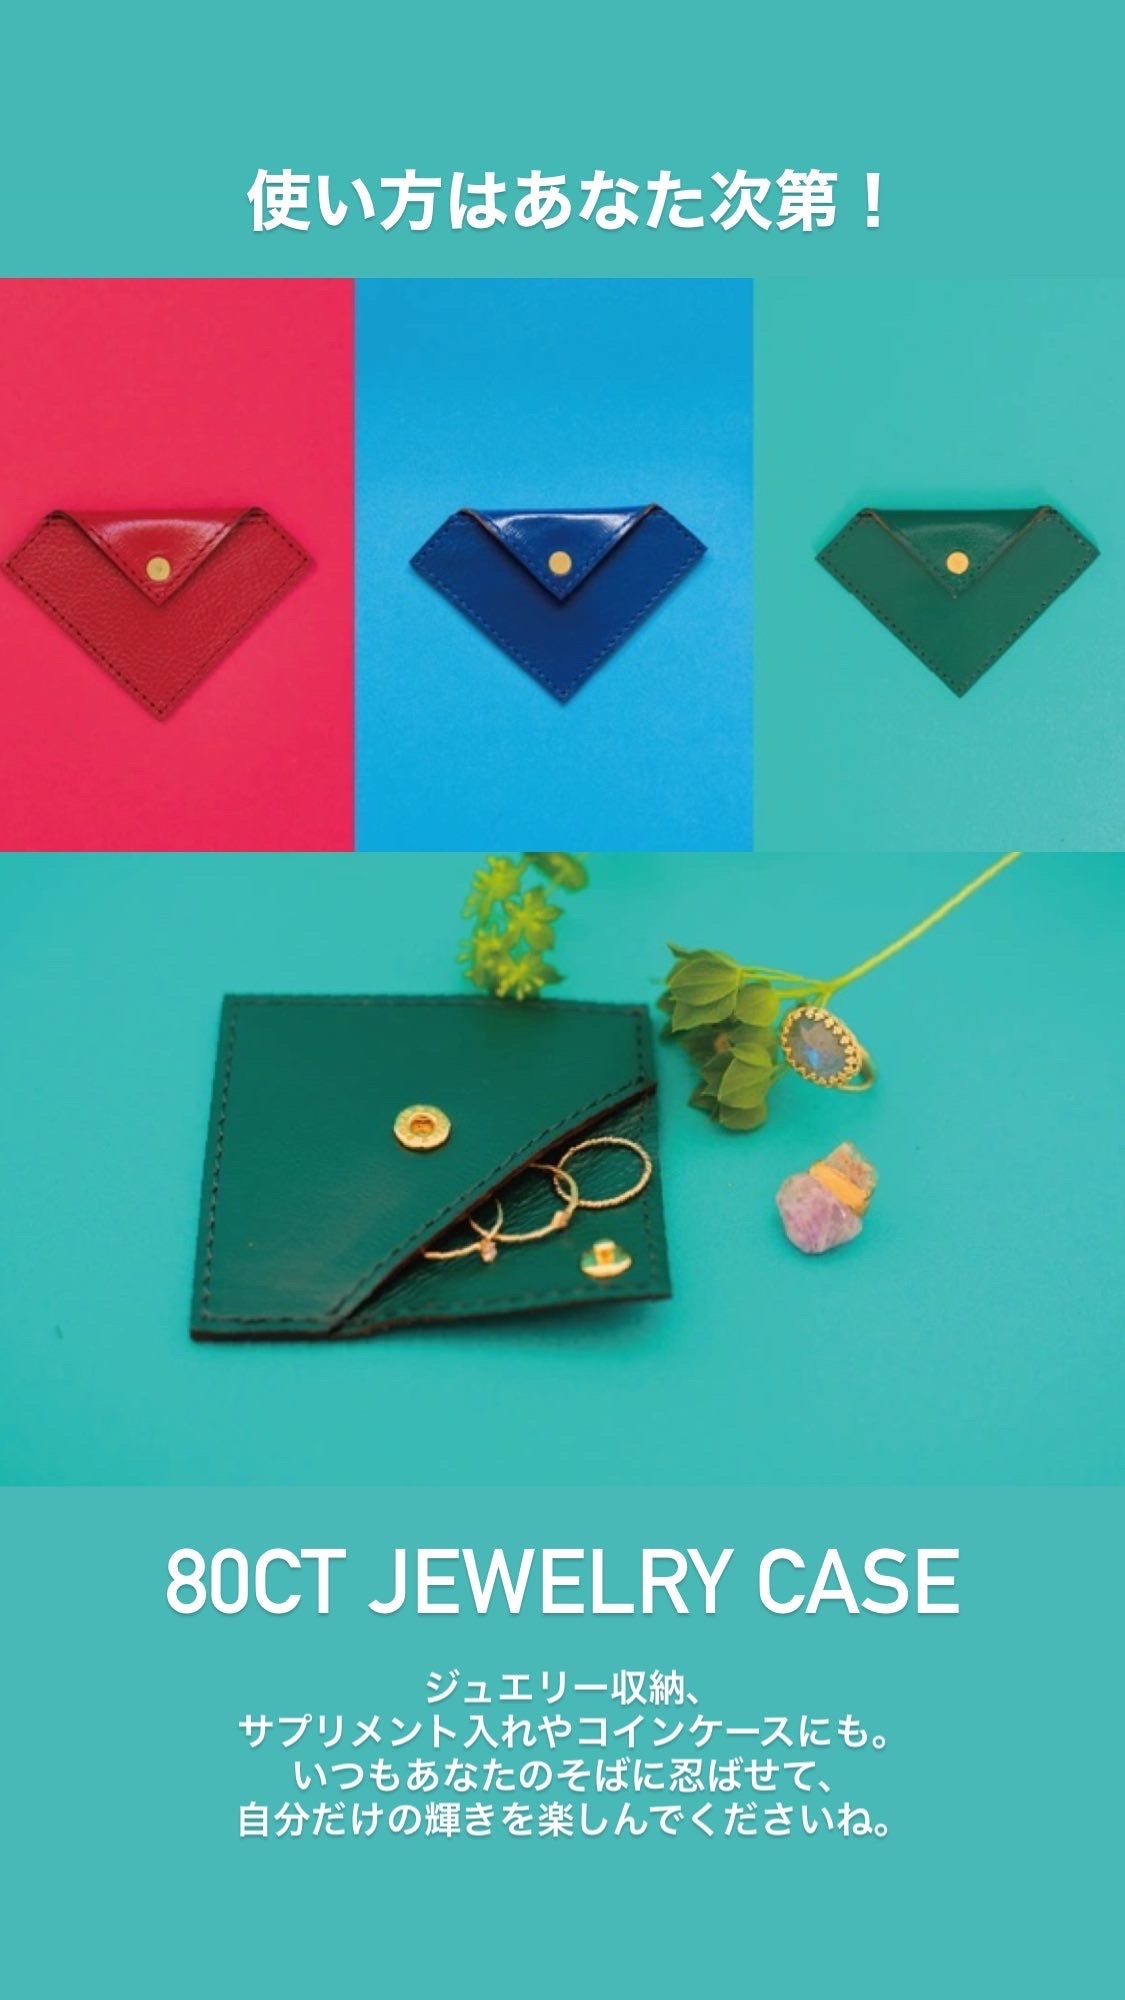 【+carat】80ct Jewelry case